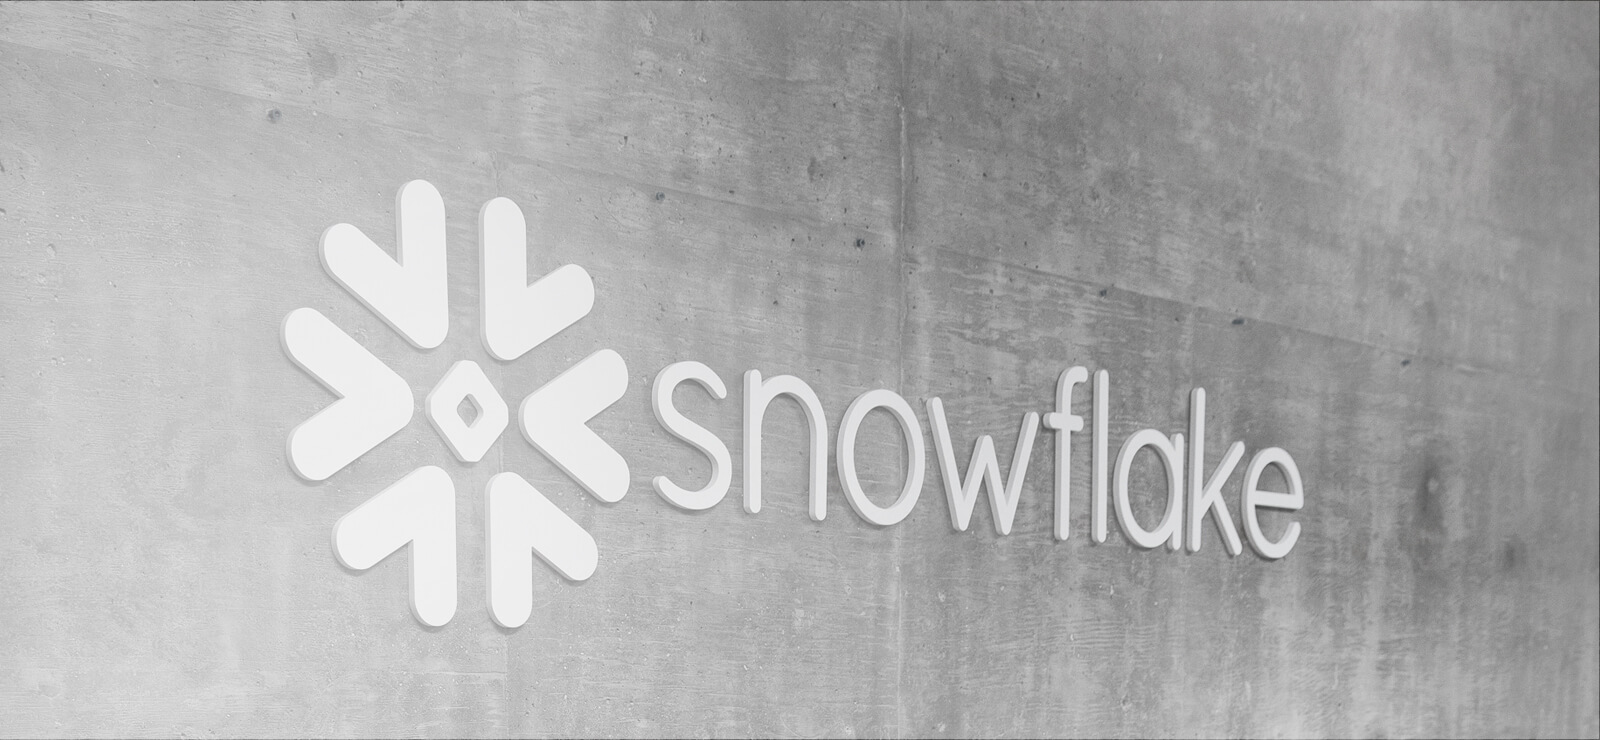 Snowflake as Your Modern Data Lake, or even Data Ocean